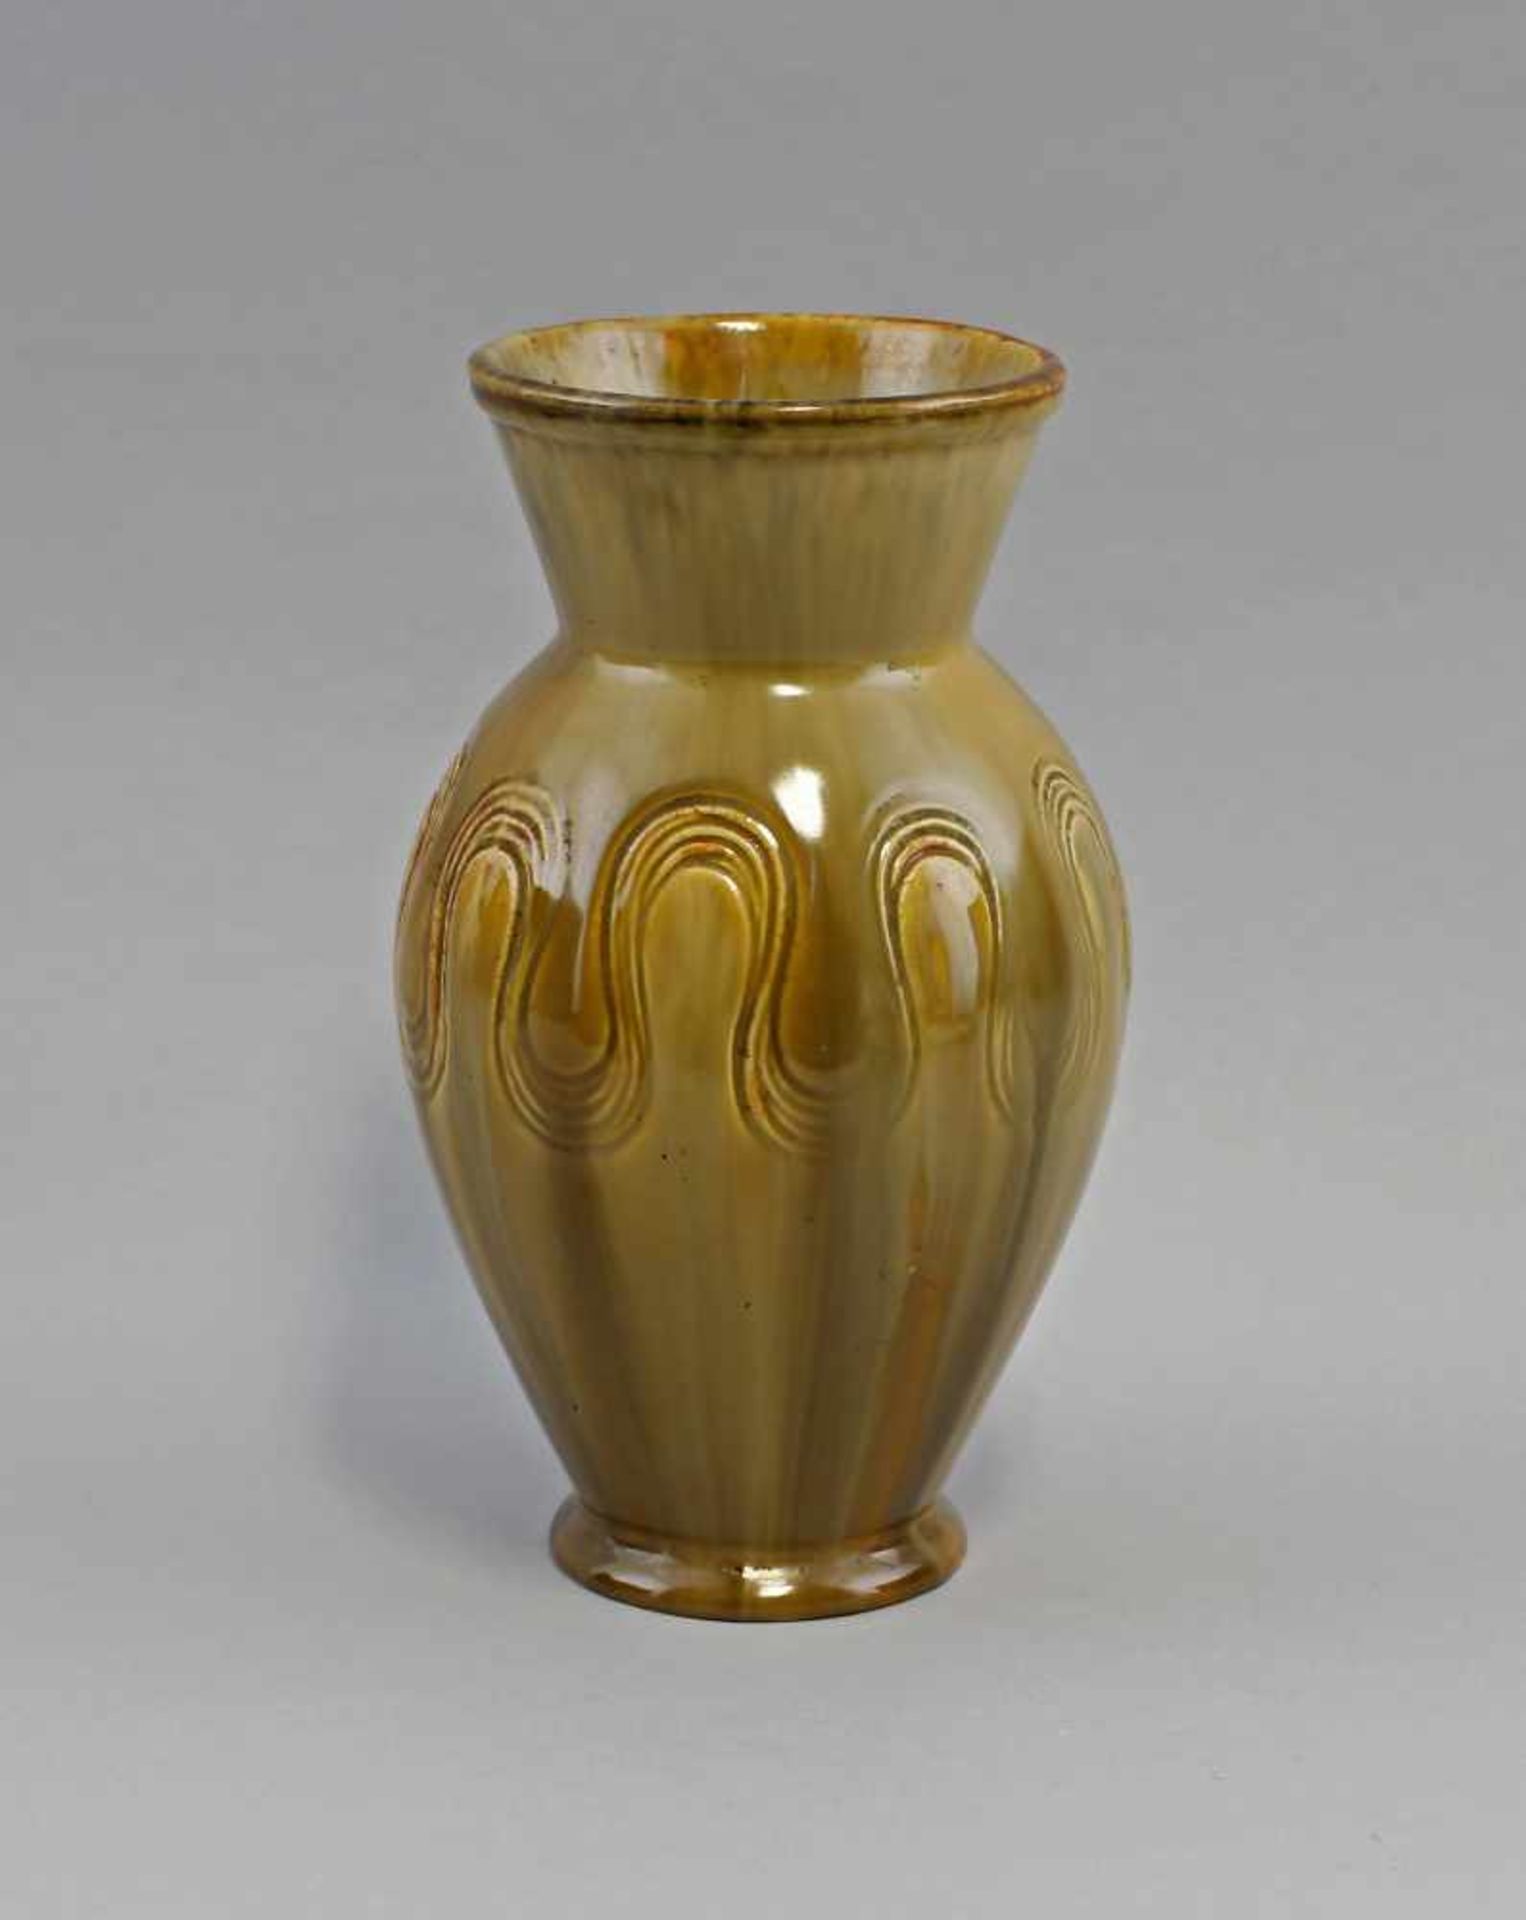 Jugendstil Vase Laufenum 1940 in Laufen (Schweiz) hergestellt, heller Scherben, Wellenbandrelief,